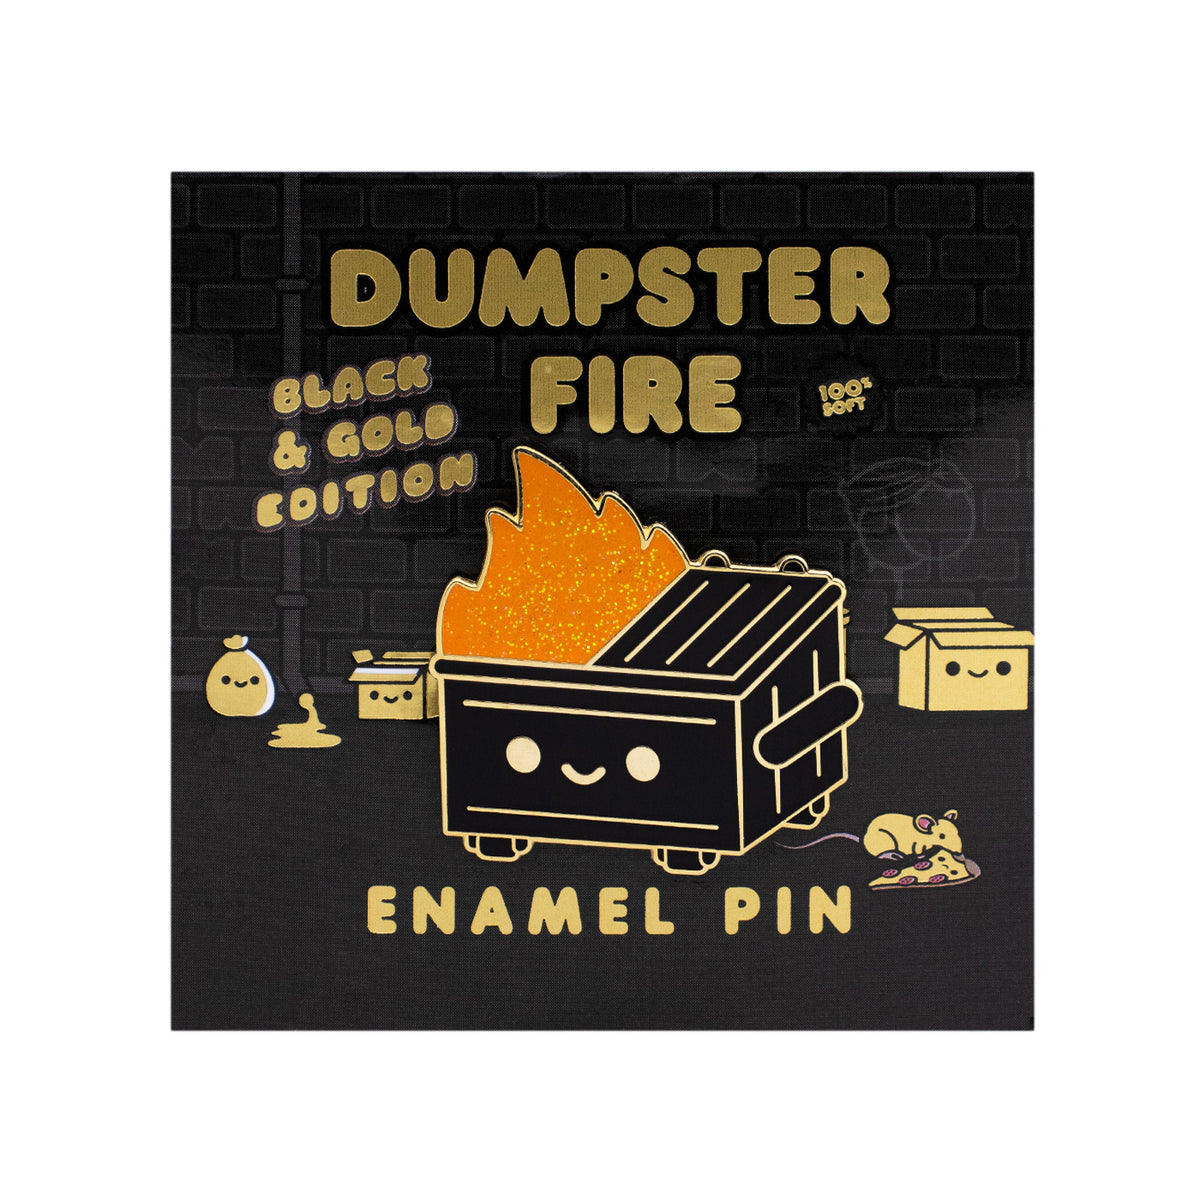 Dumpster Fire - Black &amp; Gold Enamel Pin